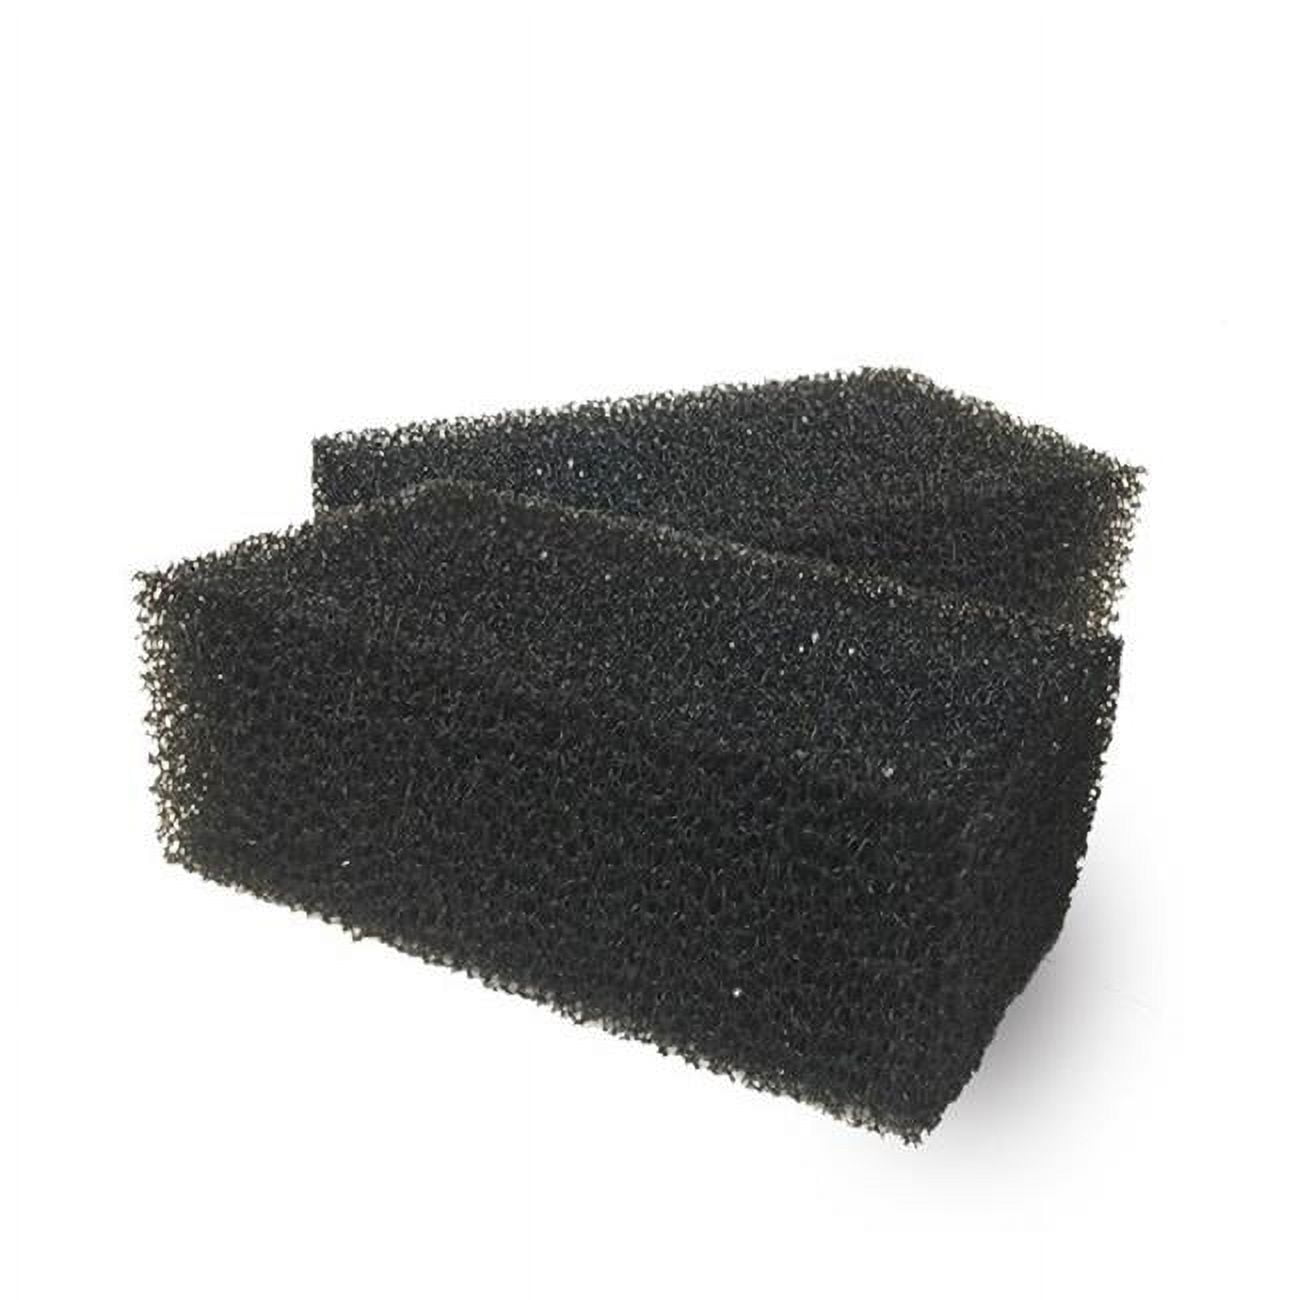 Felt Hat Cleaning Sponge